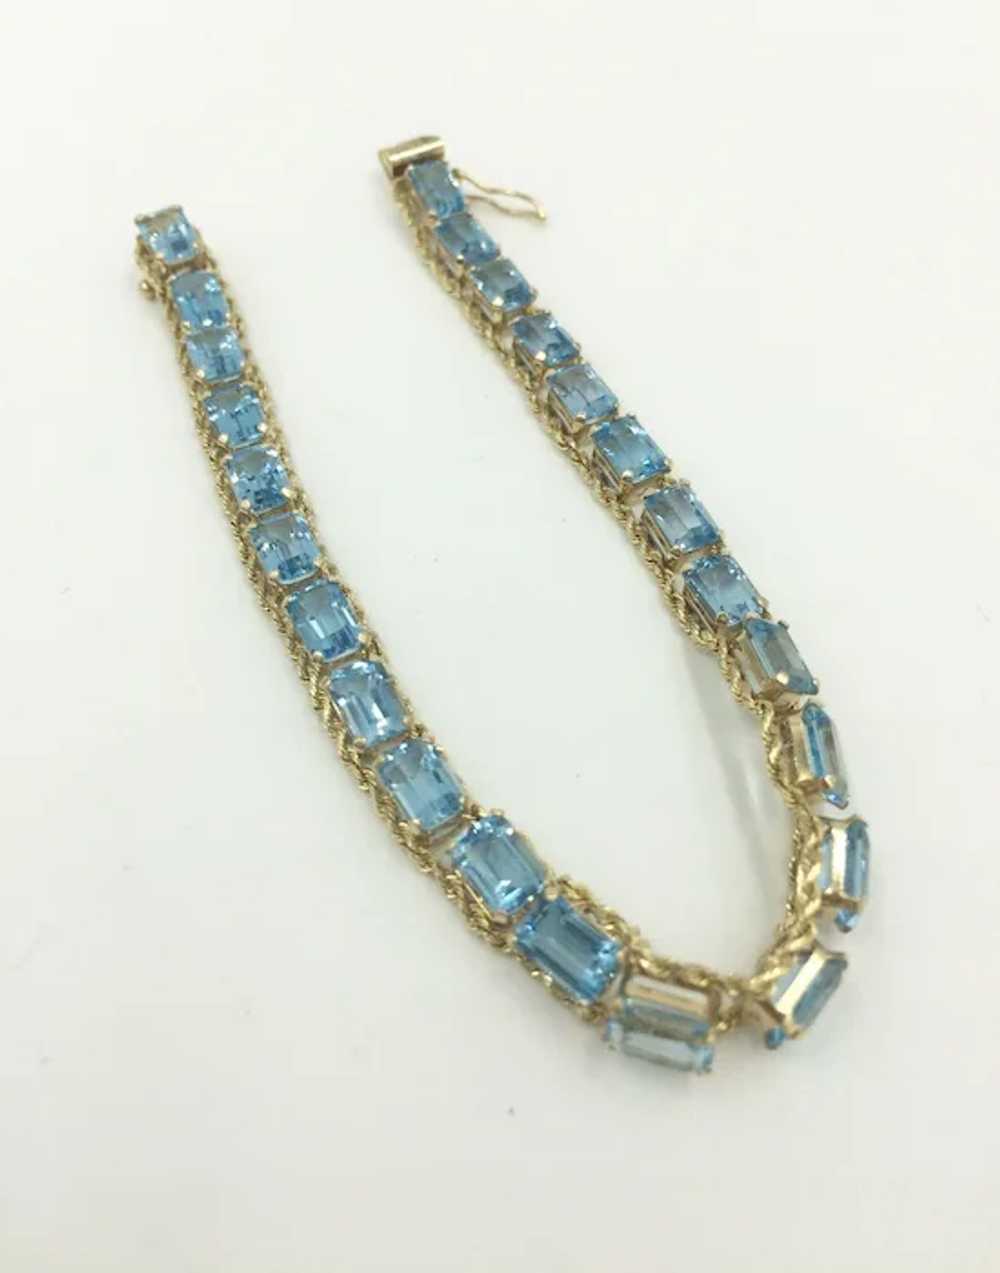 10K Gold Blue Topaz Gemstone Rope Chain Bracelet - image 7